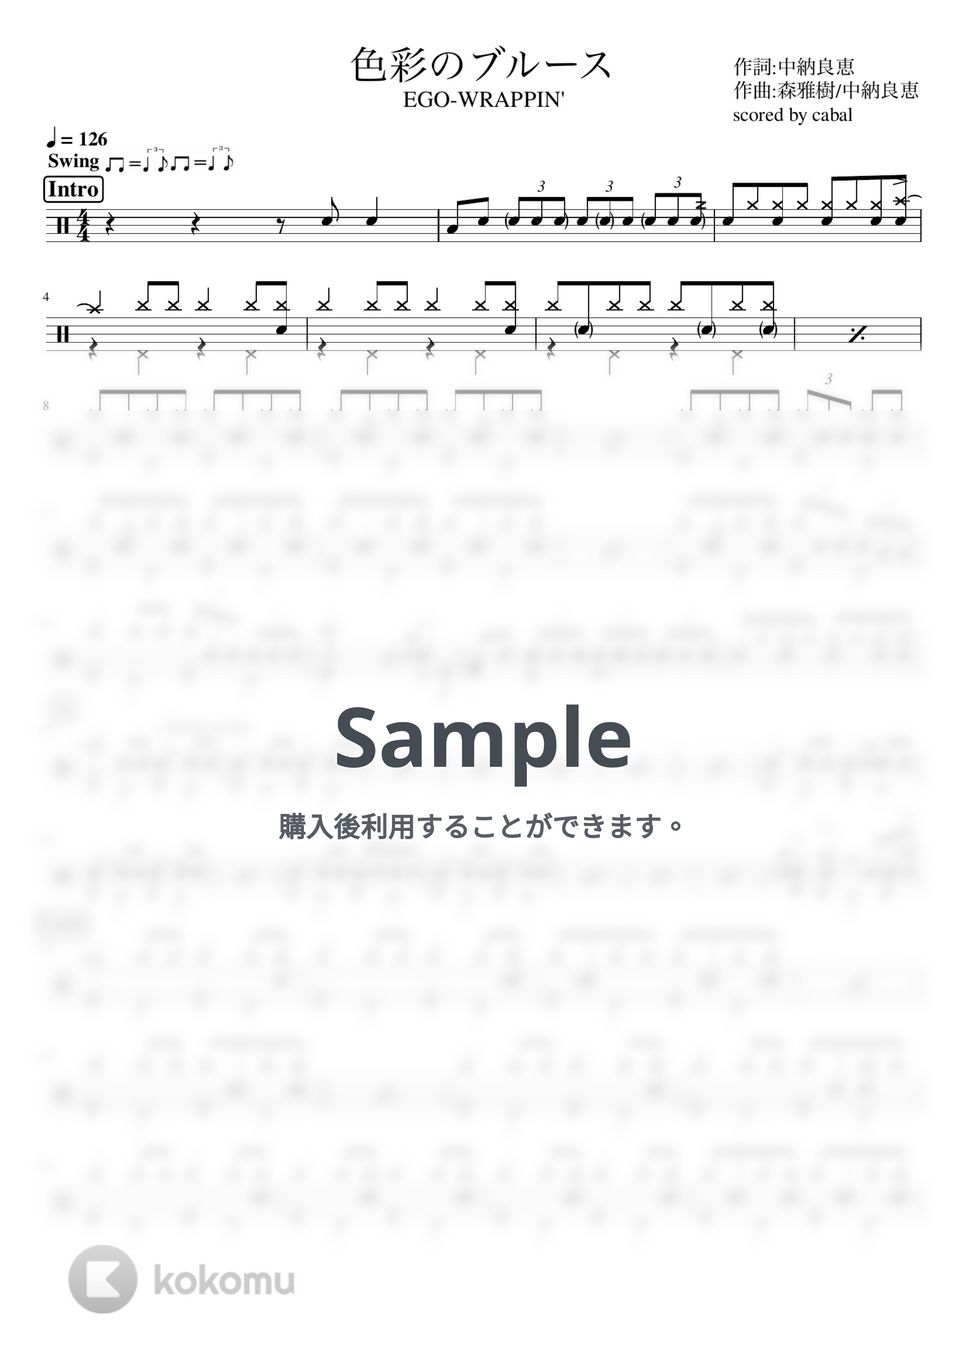 EGO WRAPPIN' - 色彩のブルース (ドラム譜面) by cabal